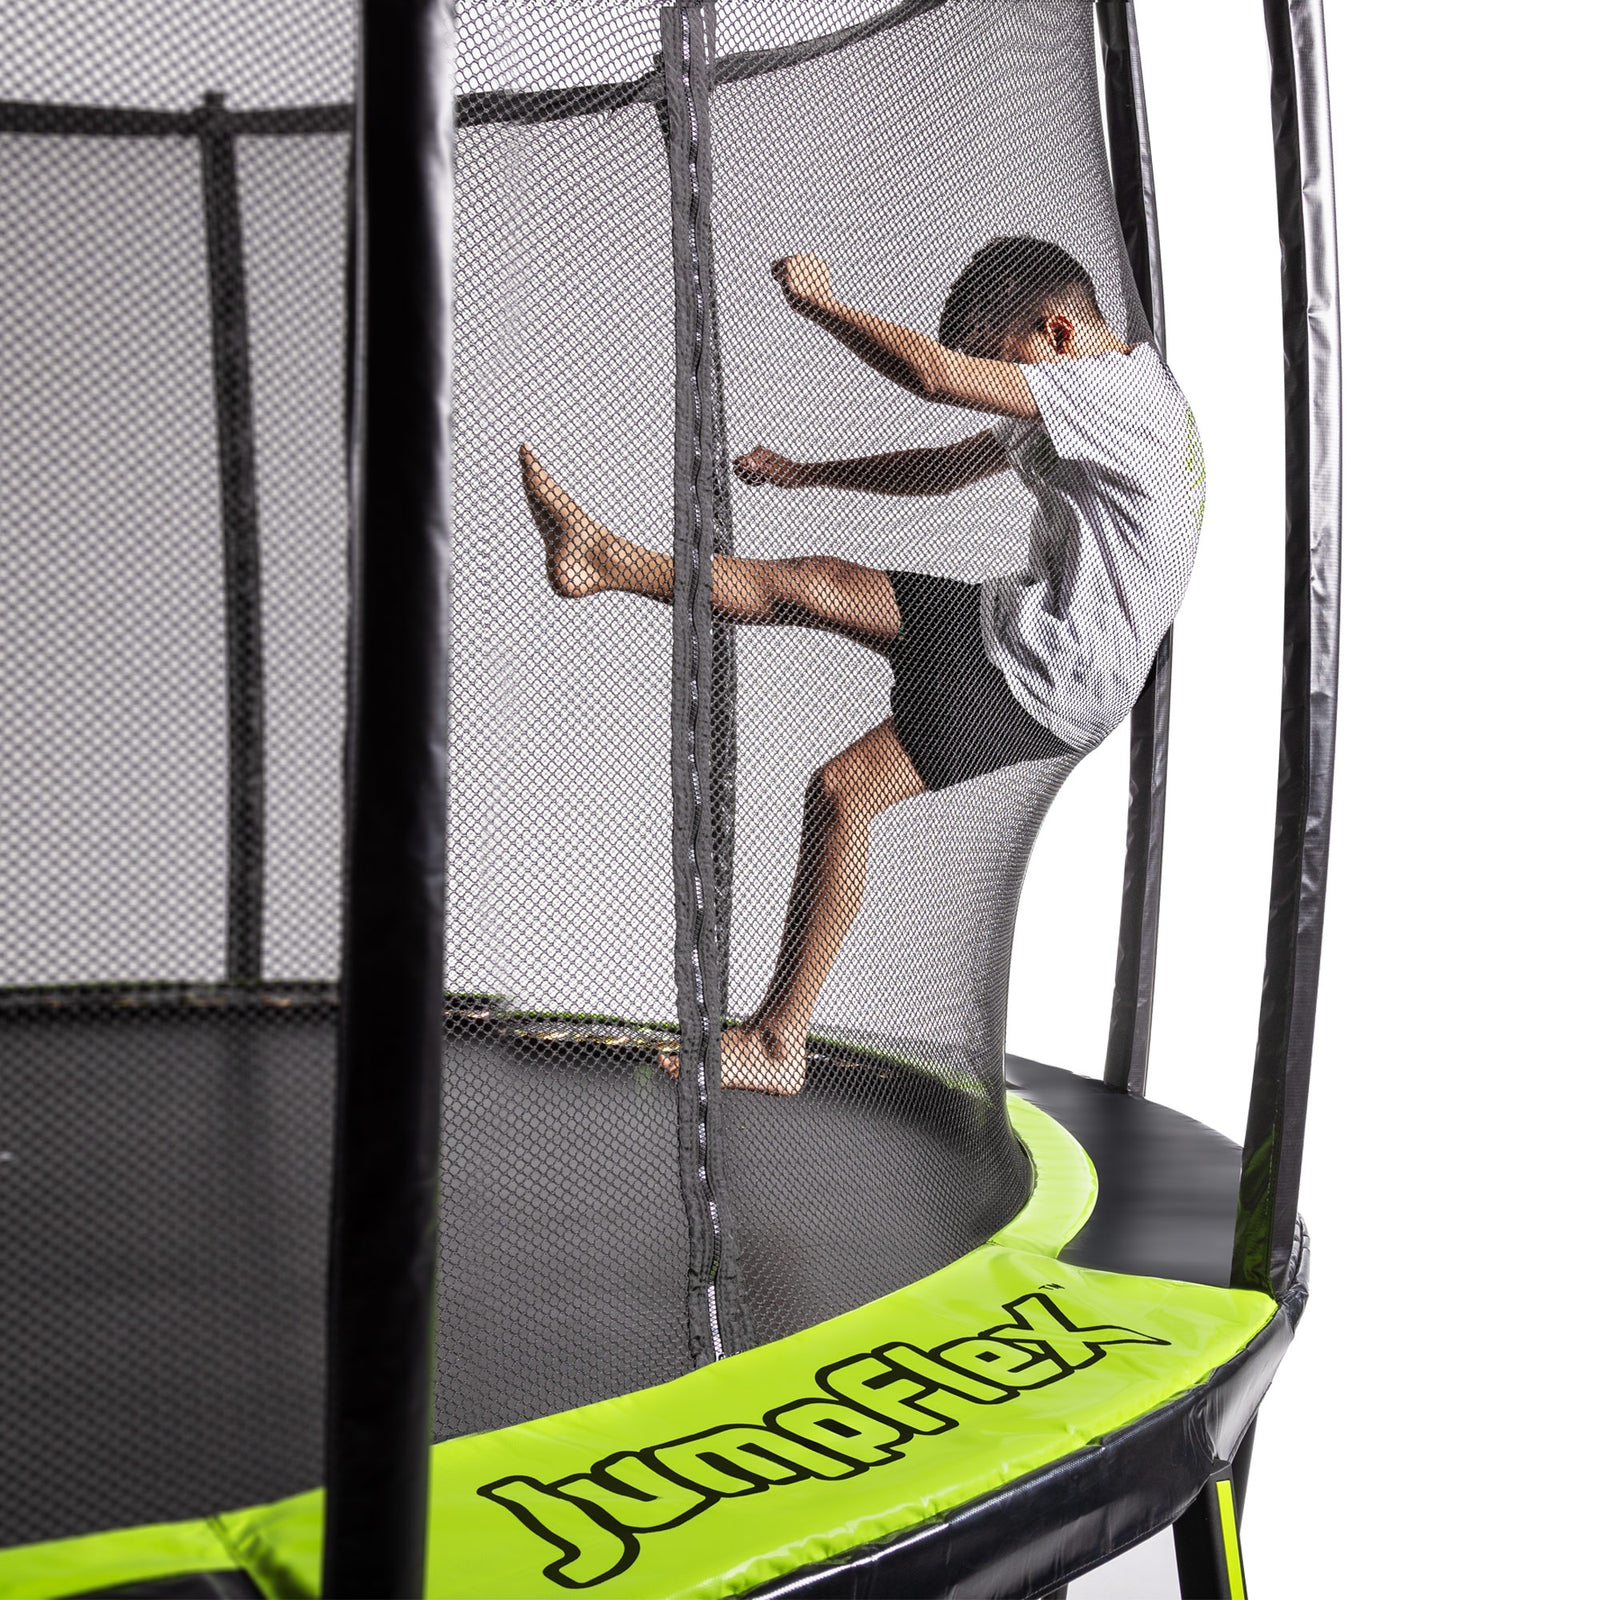 15 ft trampoline with Net - HERO | Jumpflex™ USA